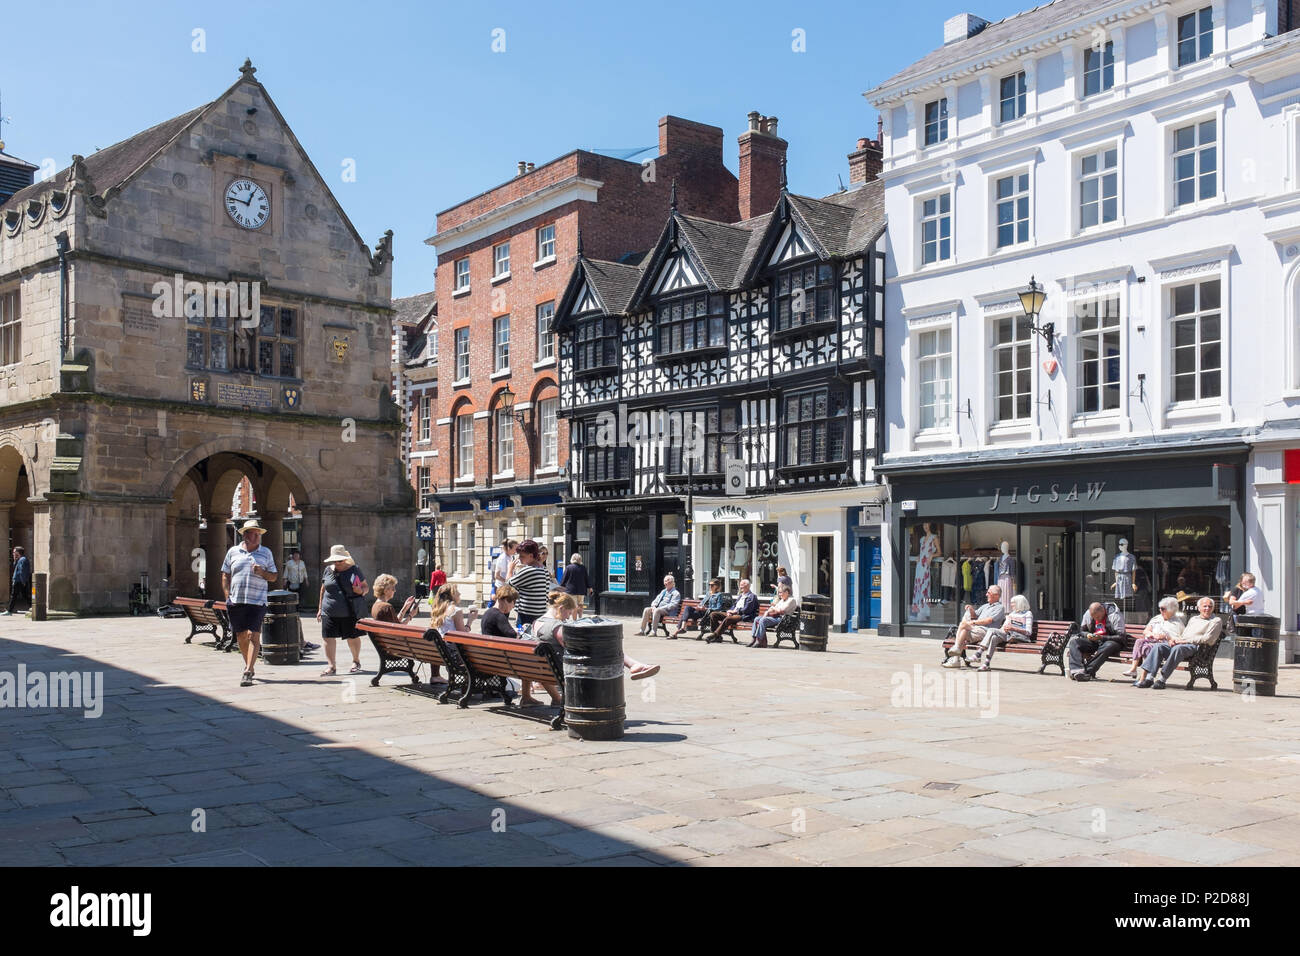 The Old Market Hall in Shrewsbury Square, Shrewsbury, Shropshire Stock Photo